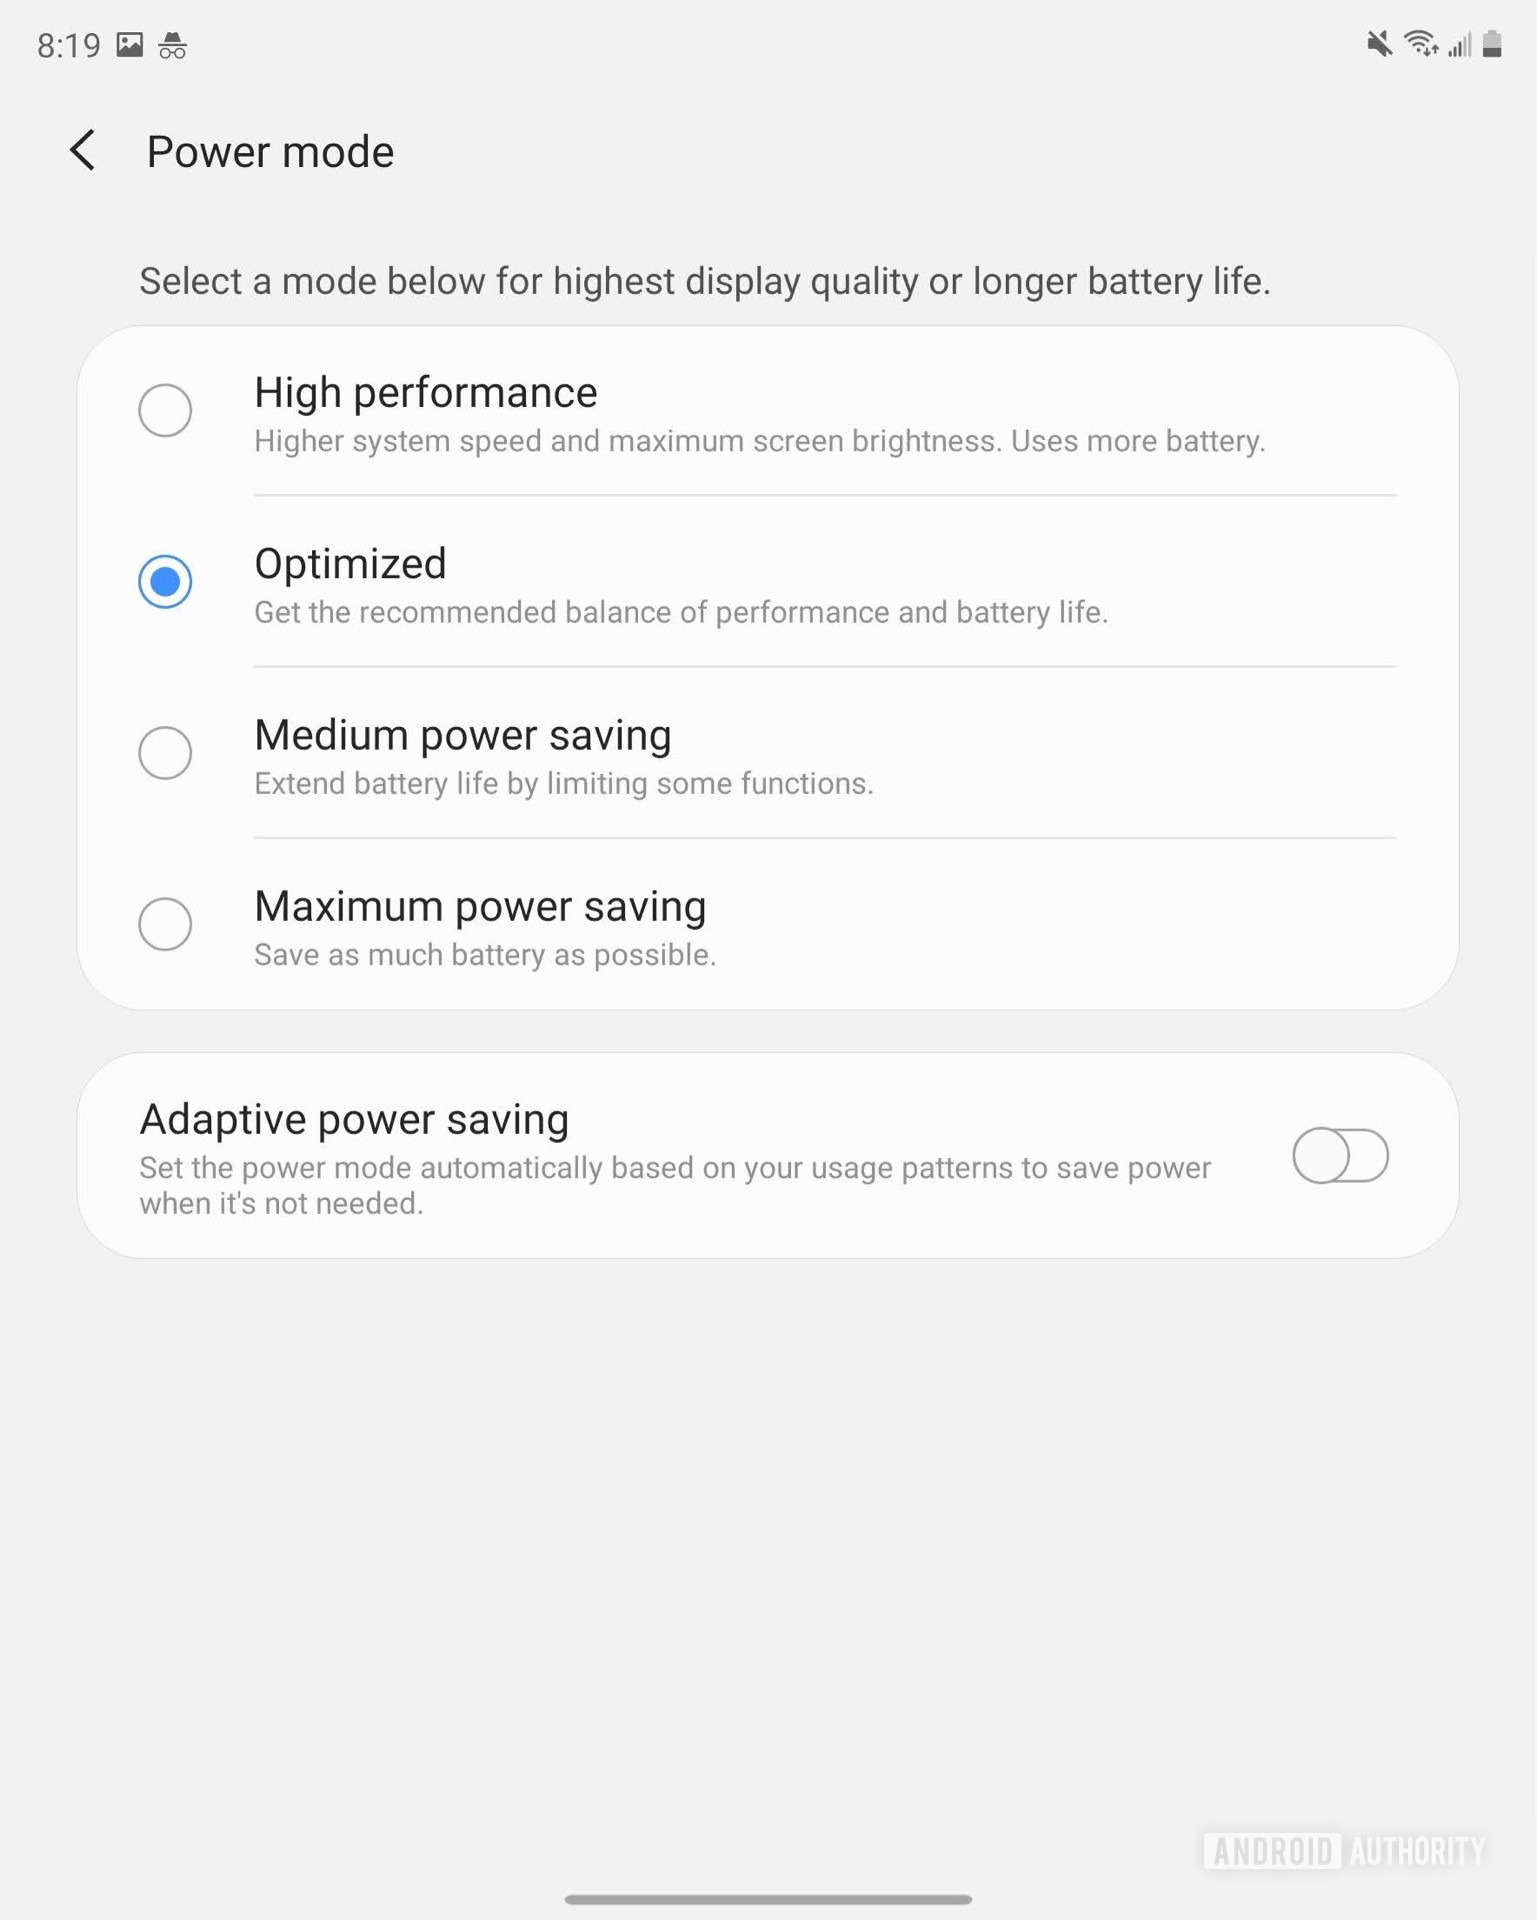 Samsung Galaxy Z Fold 2 Main Display Power mode